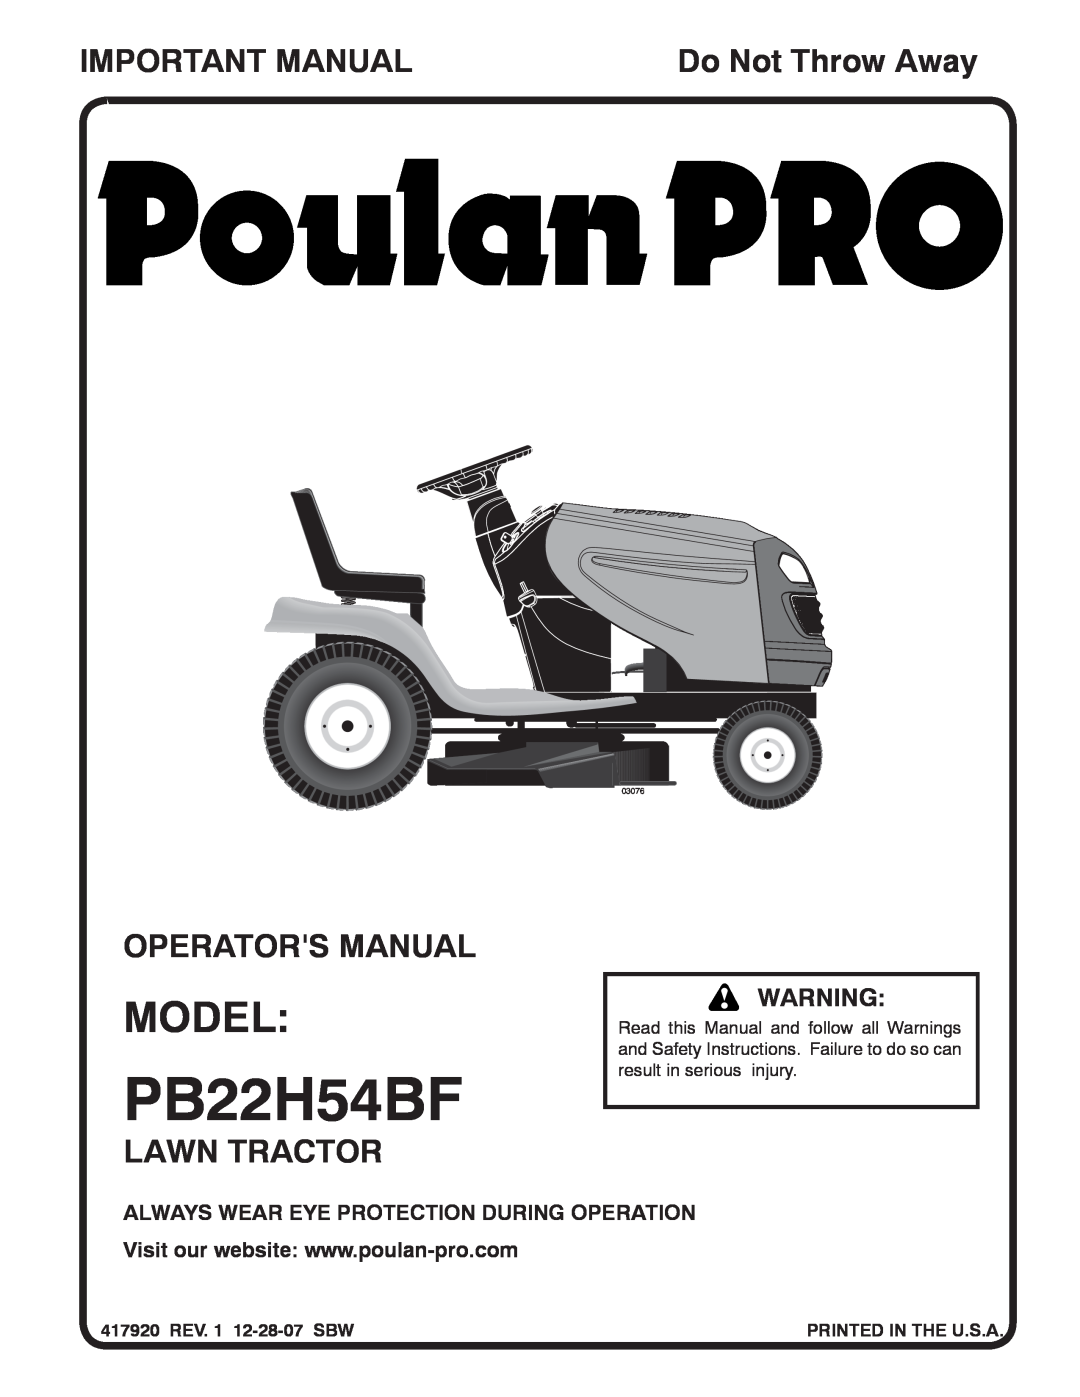 Poulan 96042006001 manual Model, Important Manual, Operators Manual, Lawn Tractor, Do Not Throw Away, PB22H54BF, 03076 